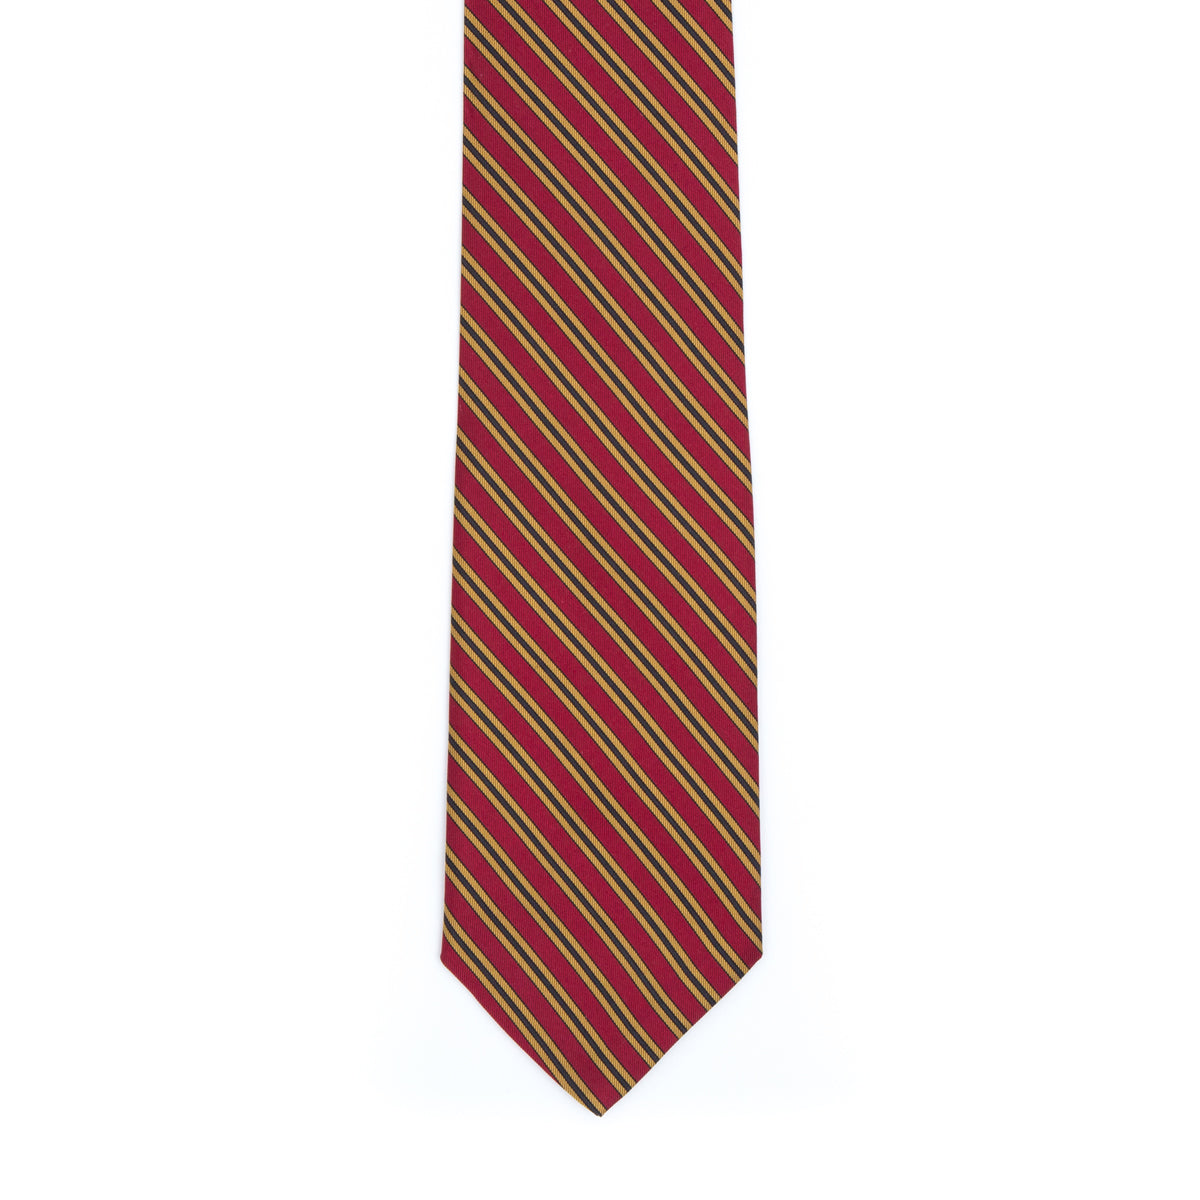 Cherry striped tie